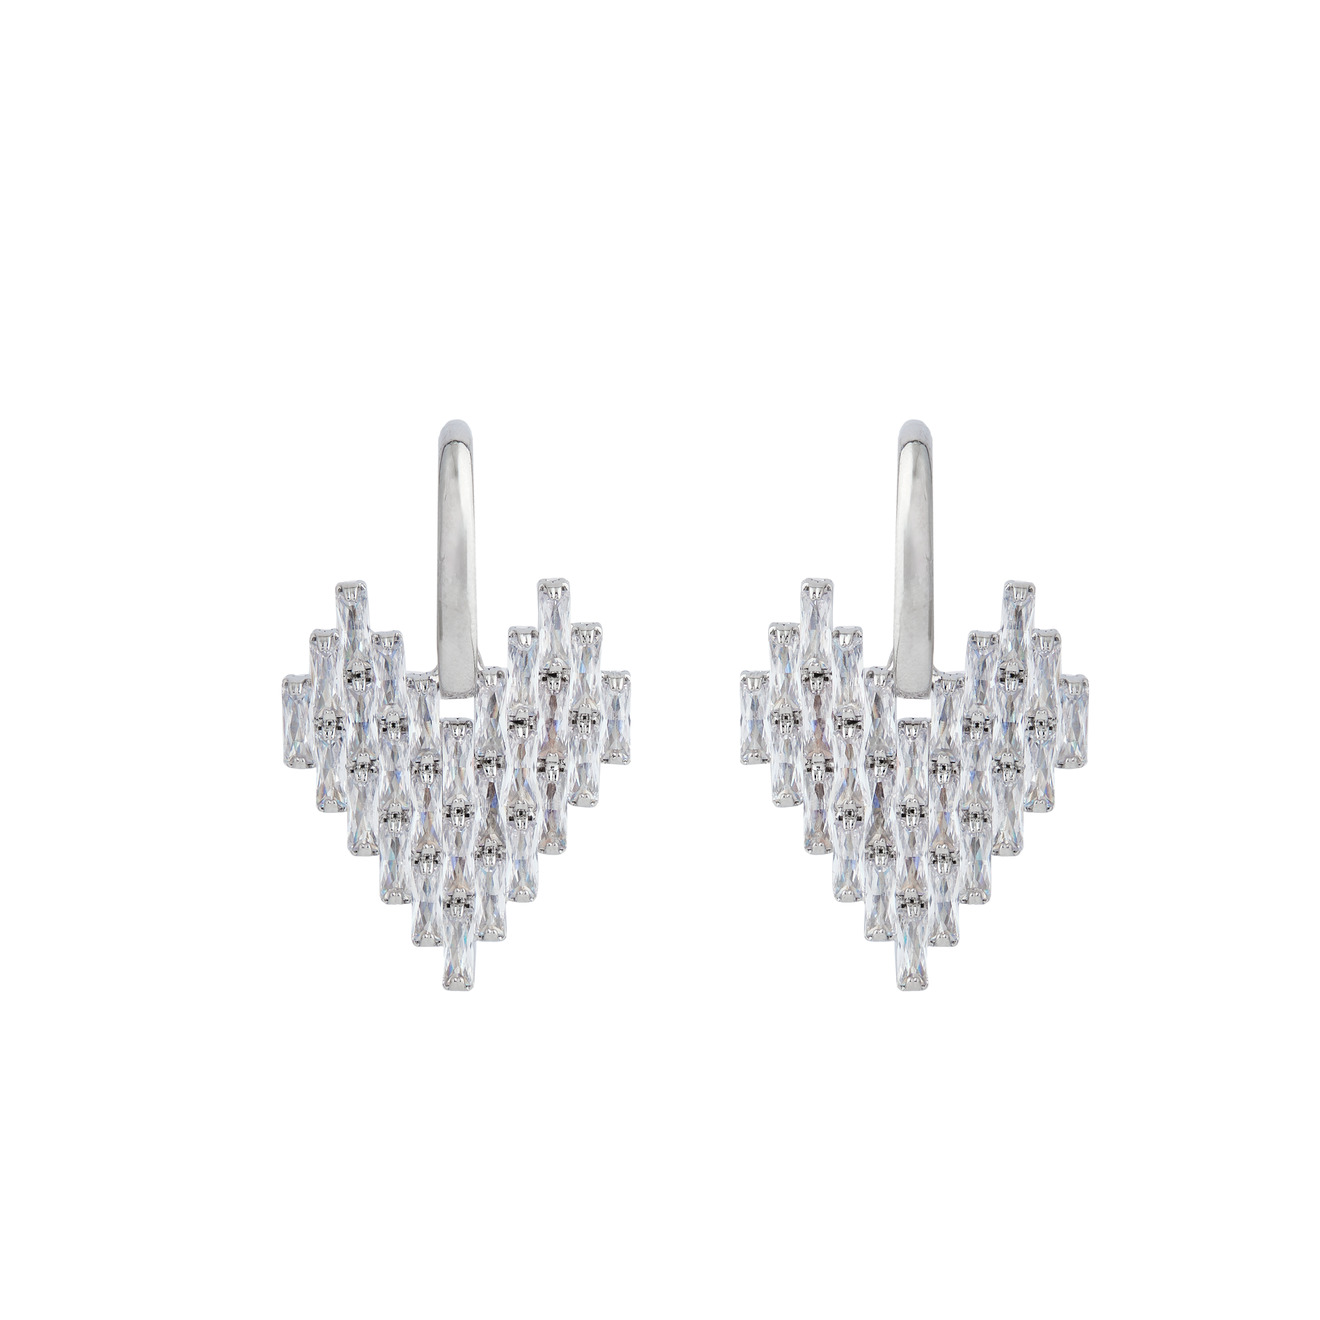 Herald Percy Серебристые серьги-сердца с багетами кристаллов